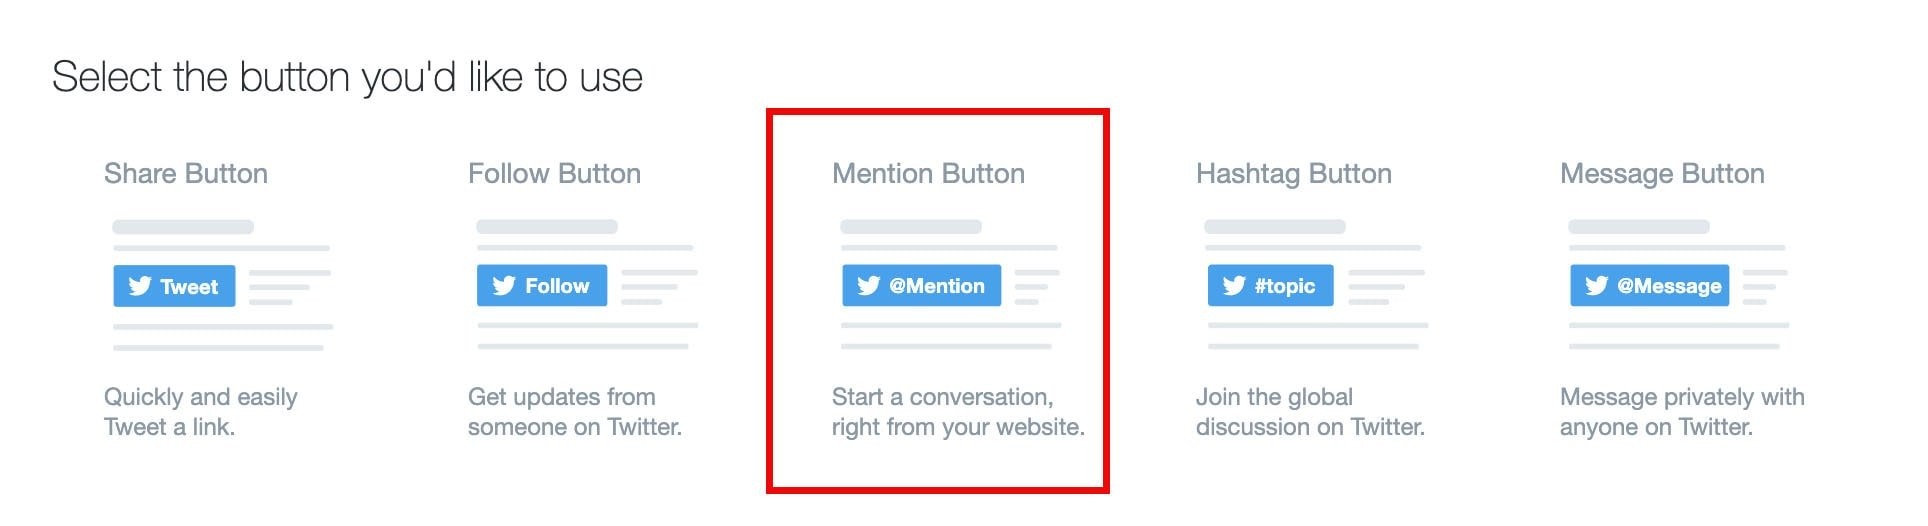 mention button on twitter's developer website